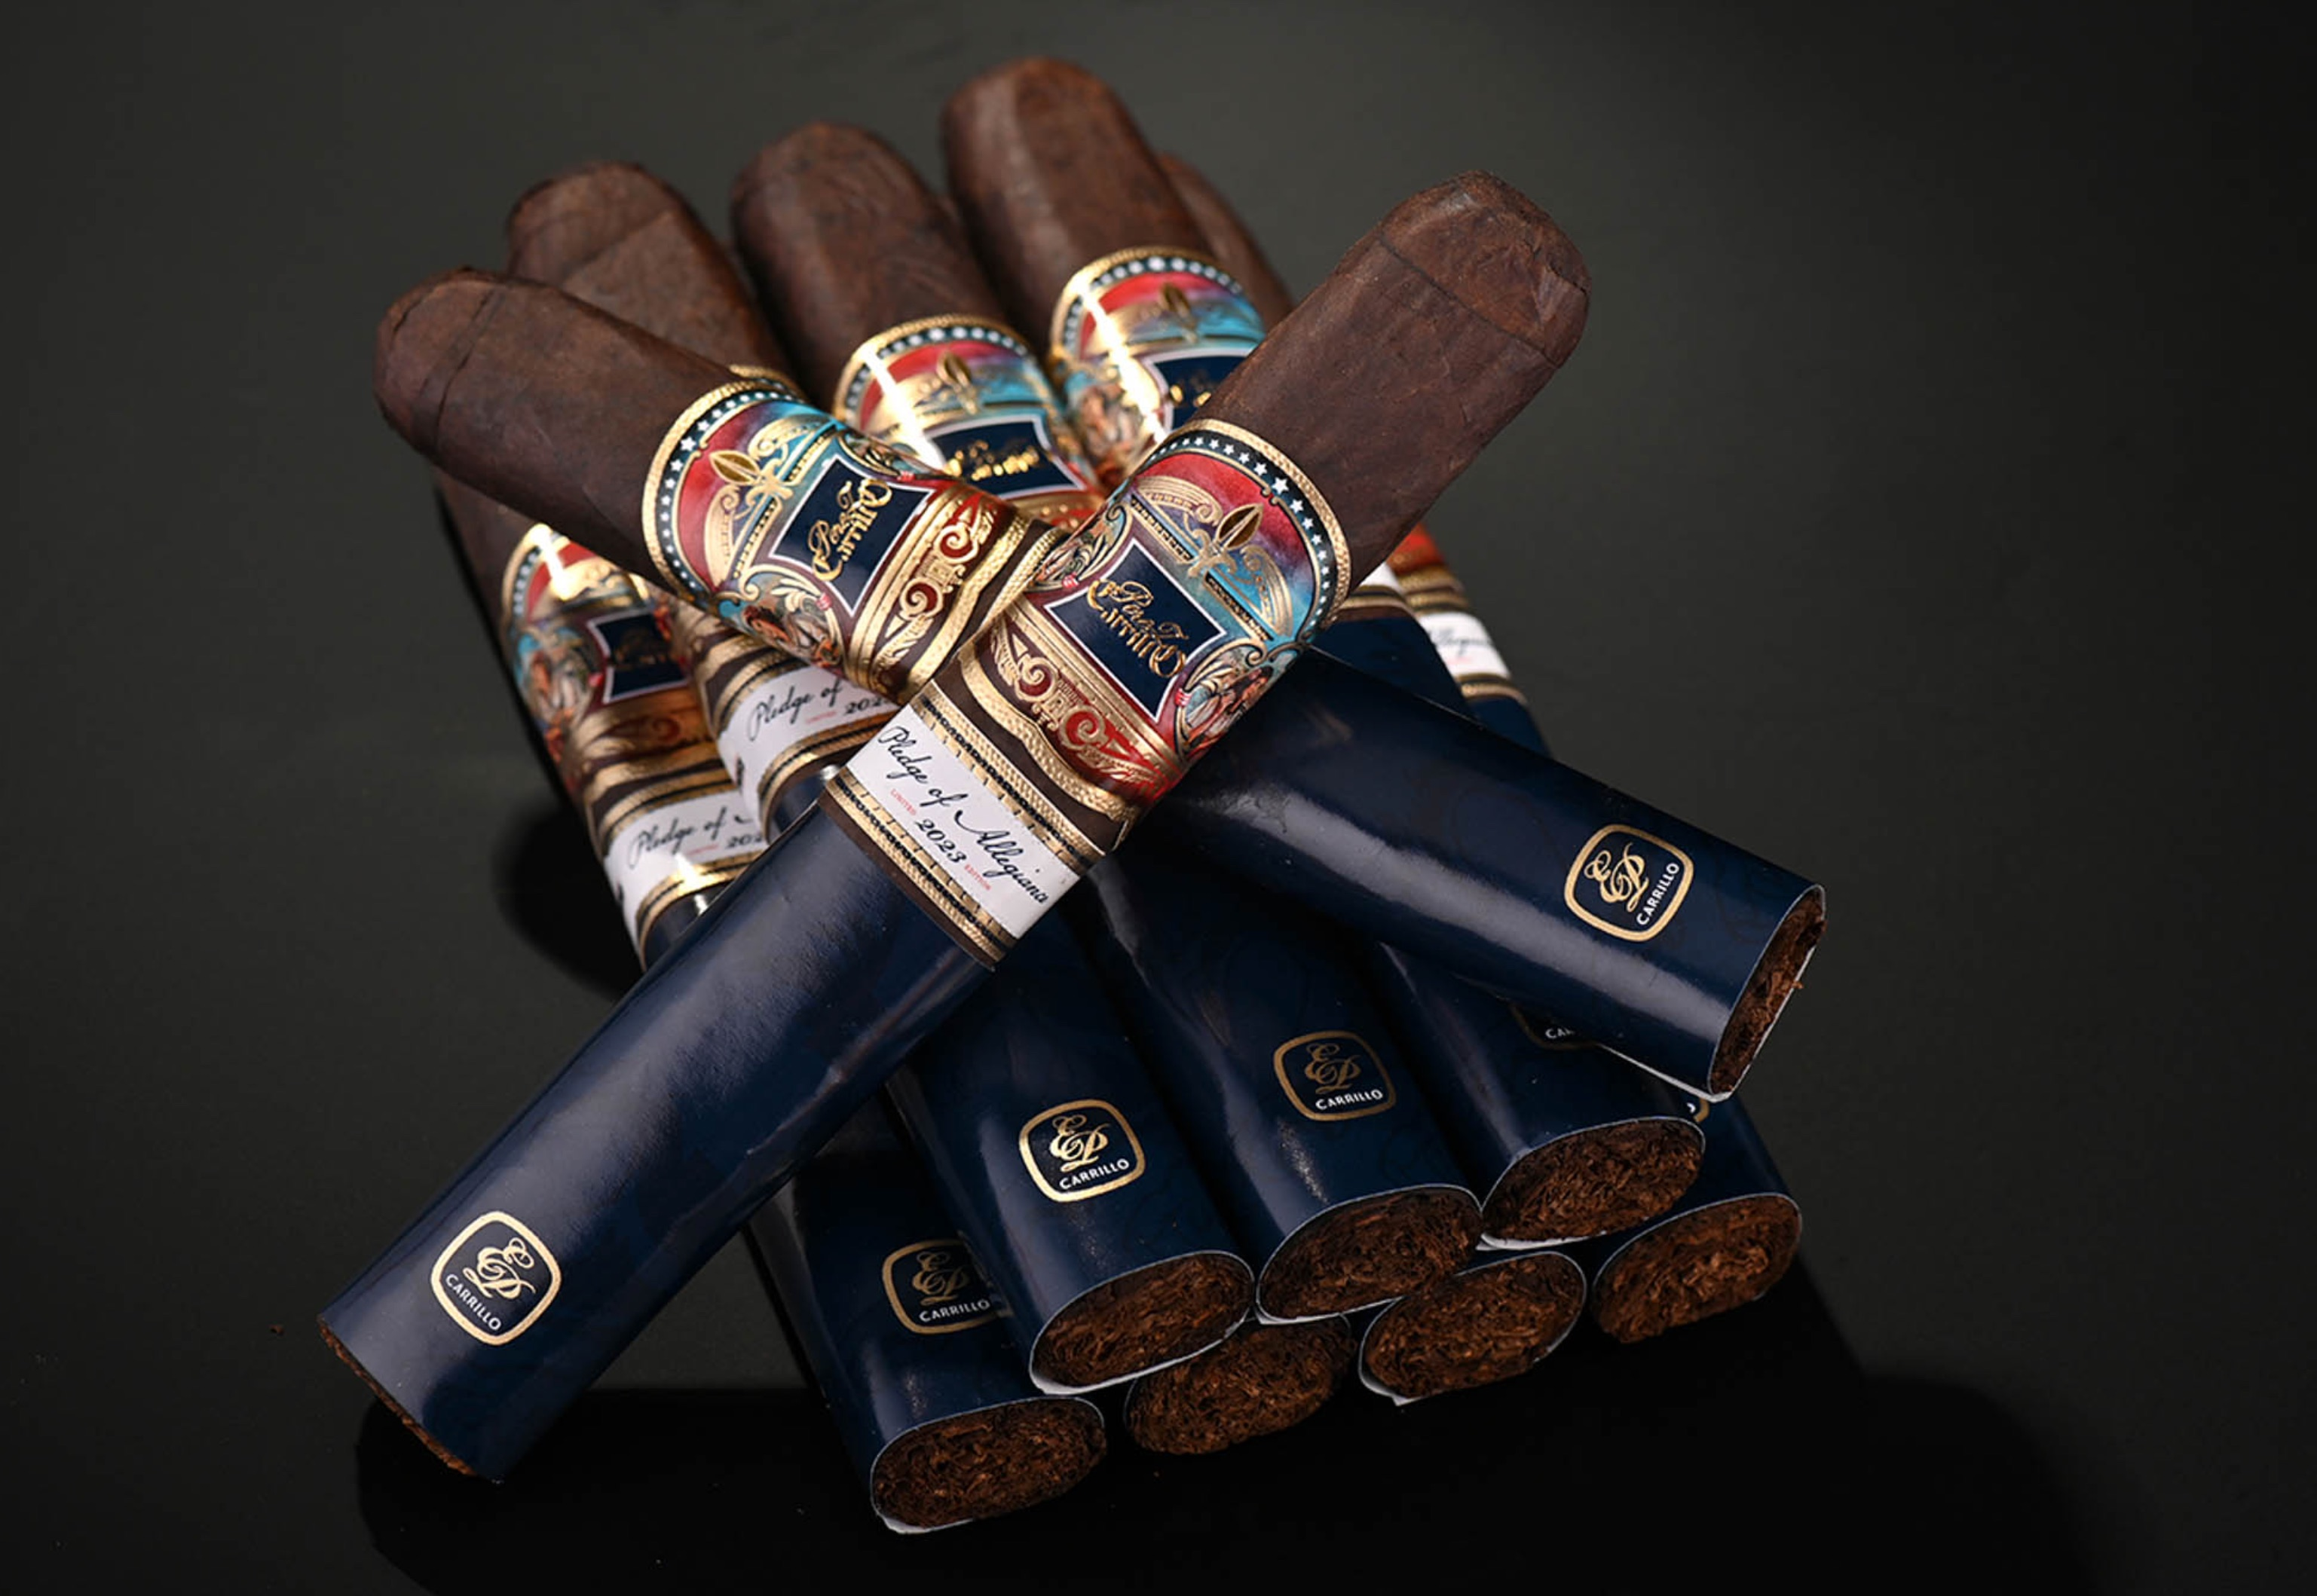 Cigar humidor with Ernesto Perez Carrillo cigars